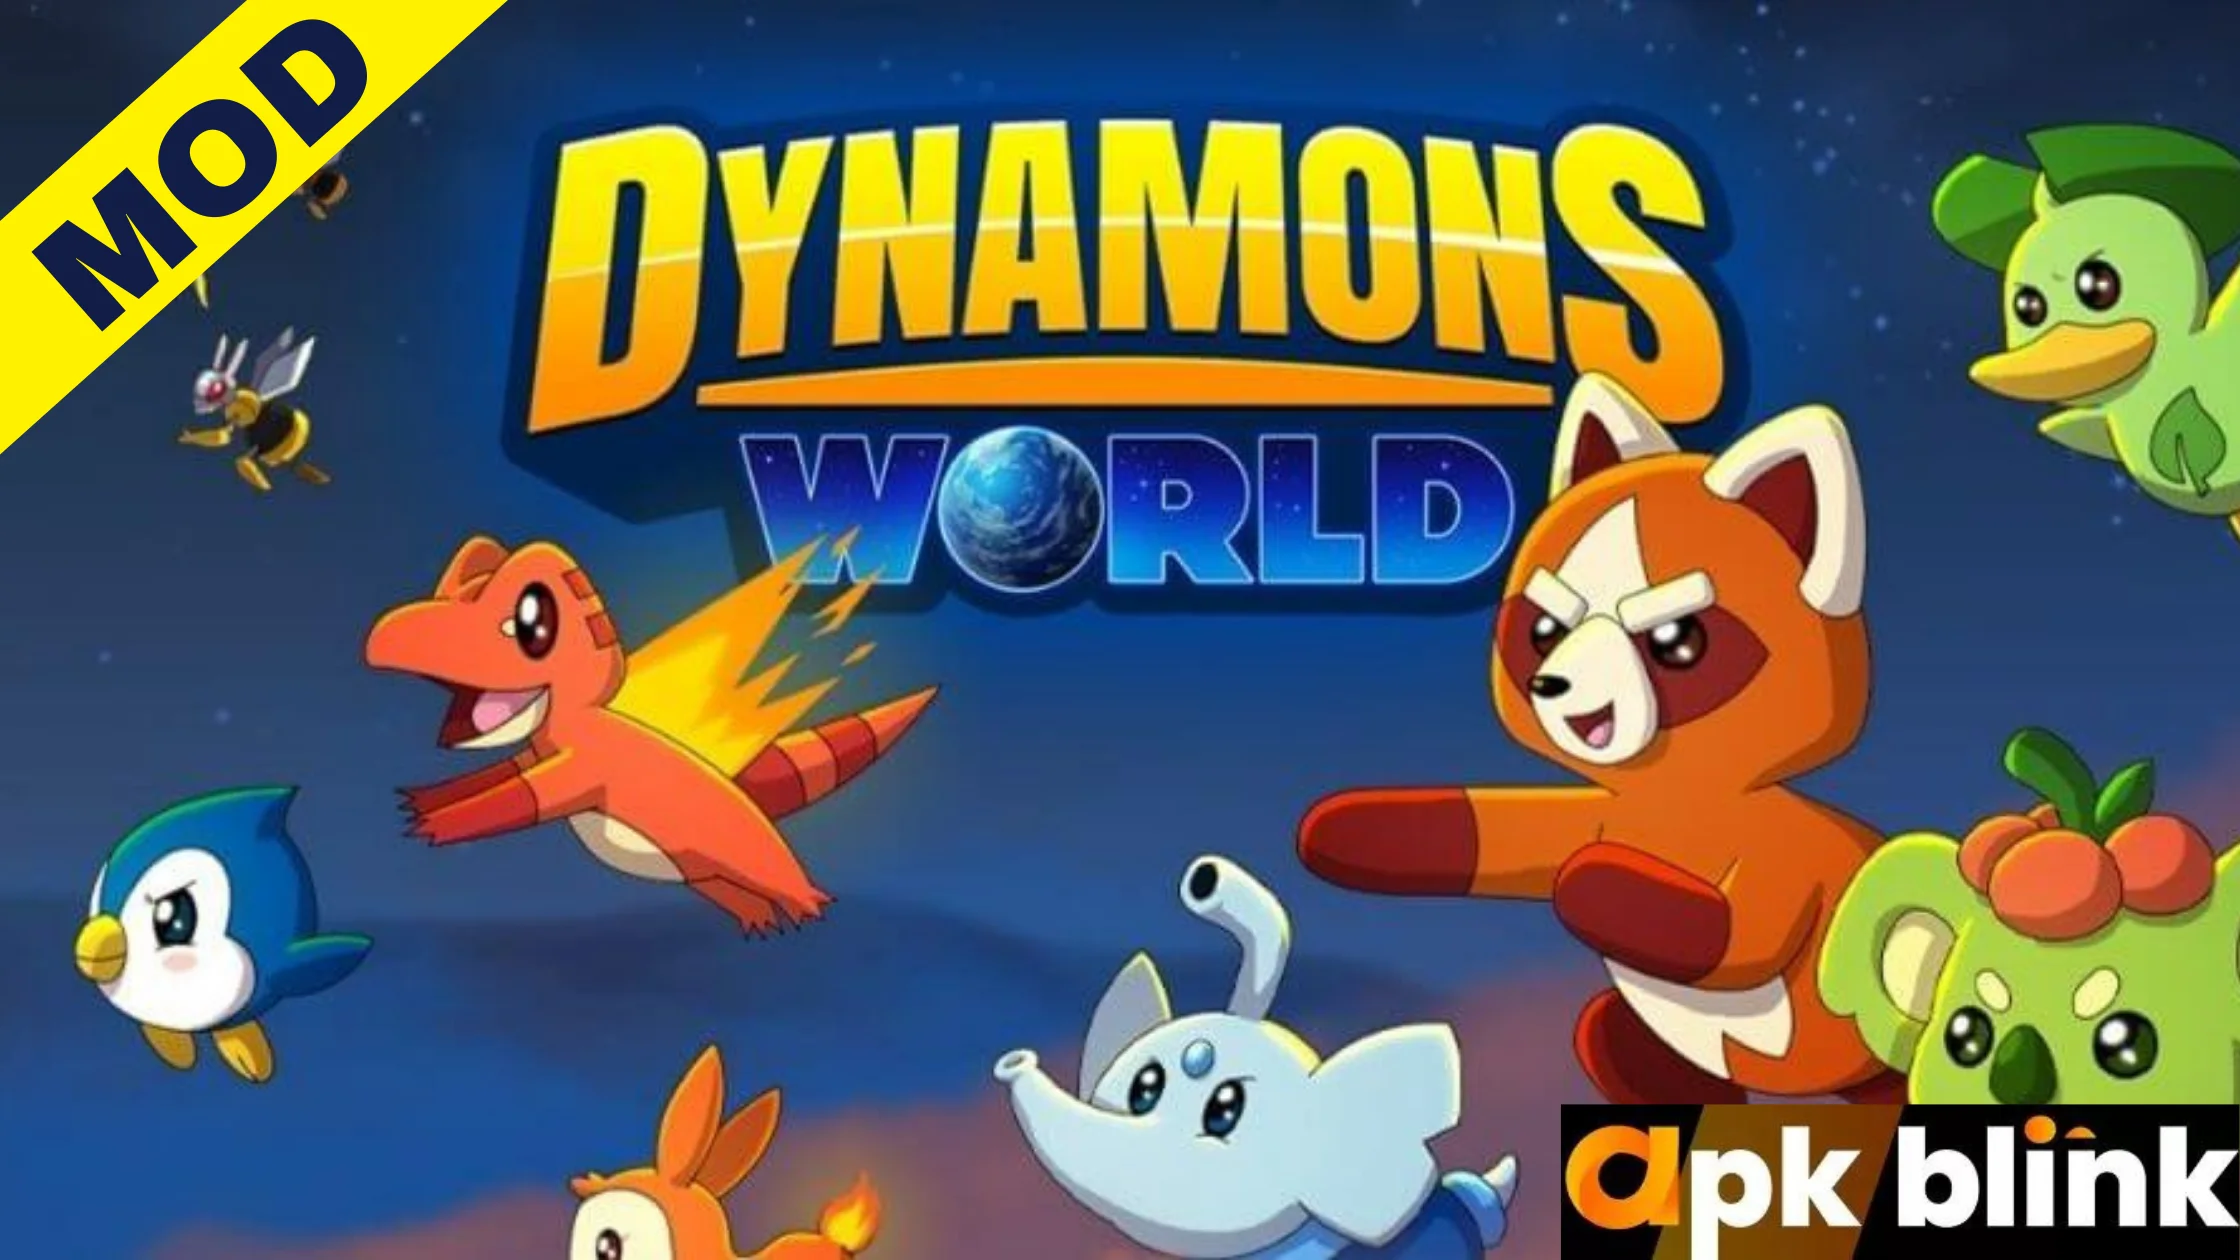 Dynamons World Mod APK